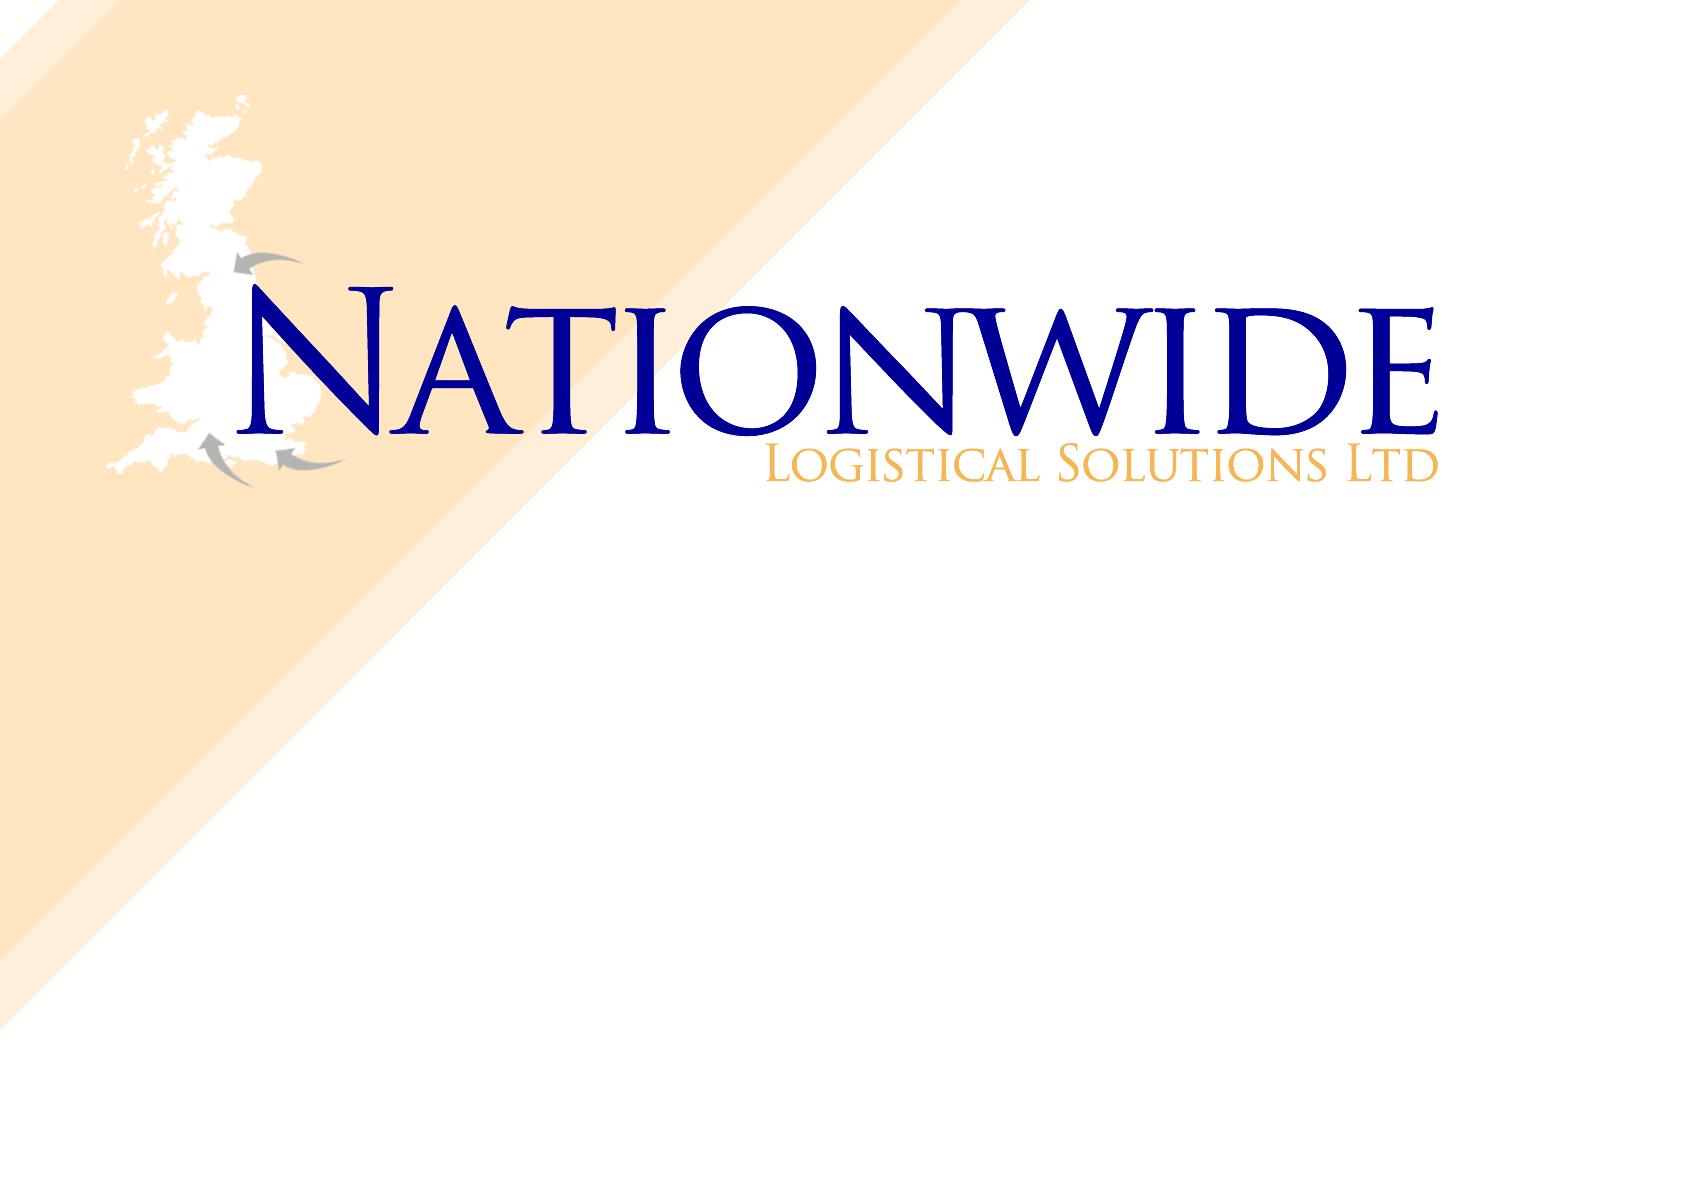 Nationwide Logistical Solutions Ltd